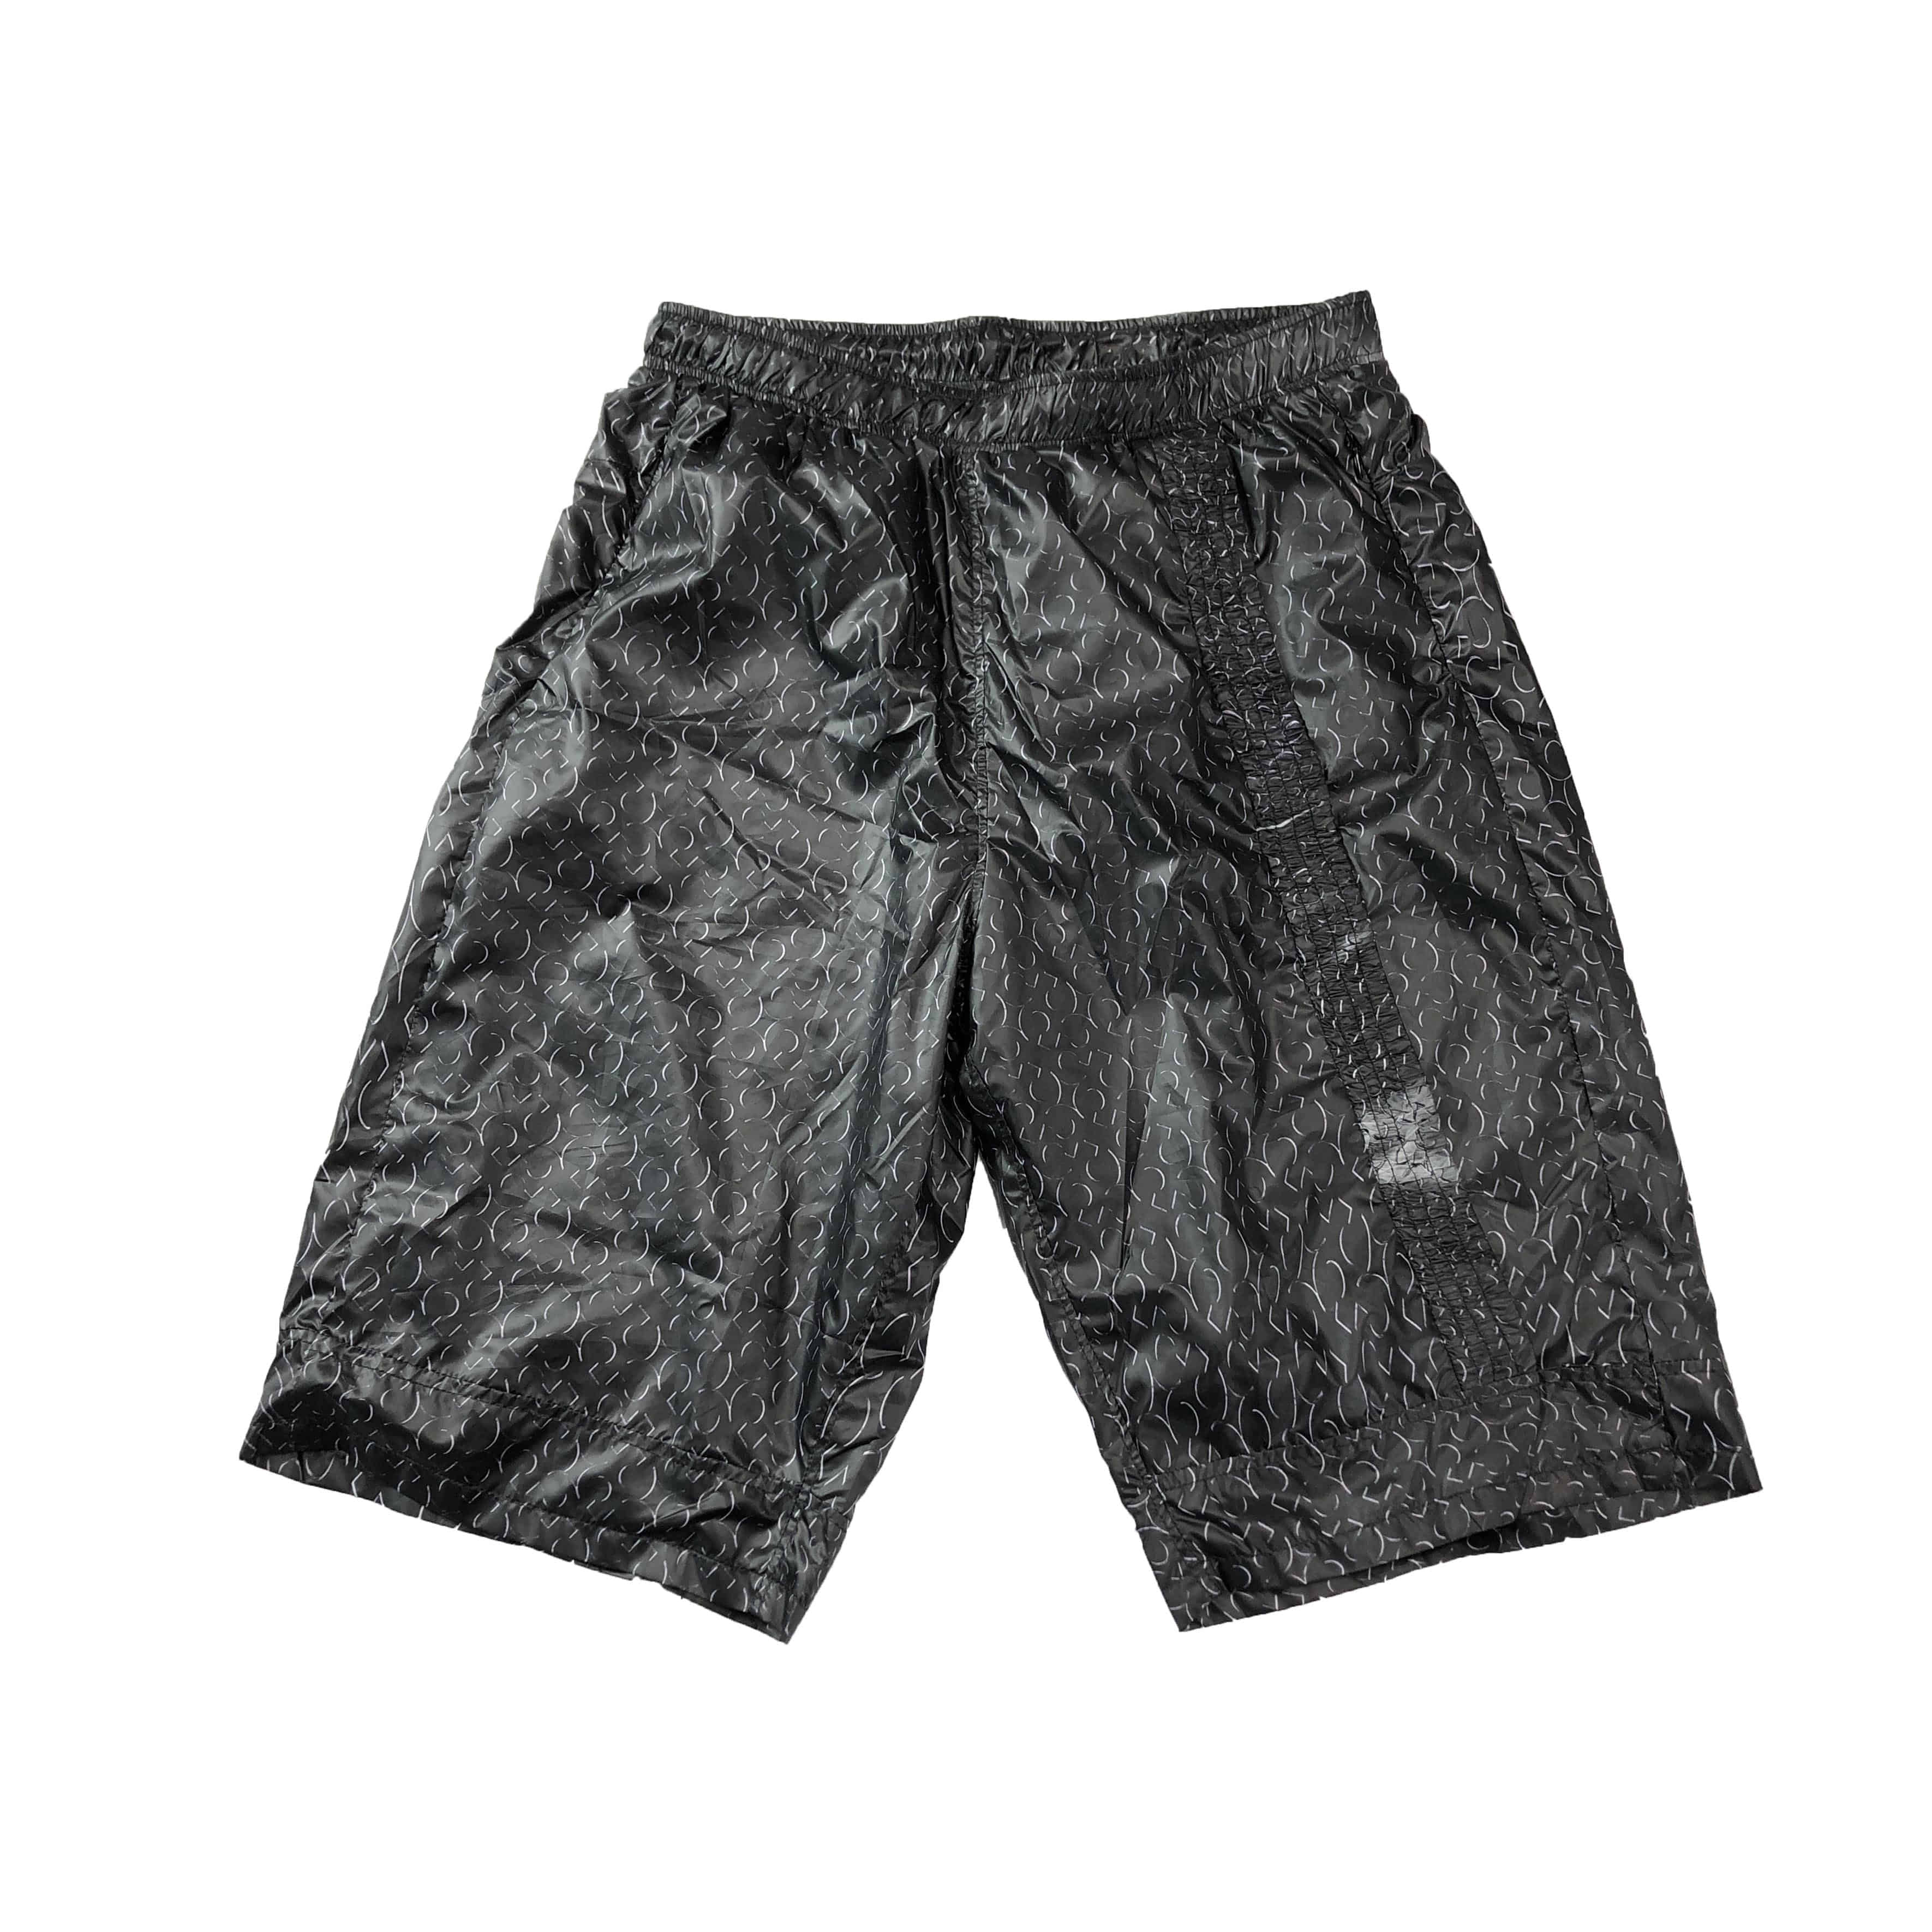 [Cottweiler] Black Athletic Shorts - Size M